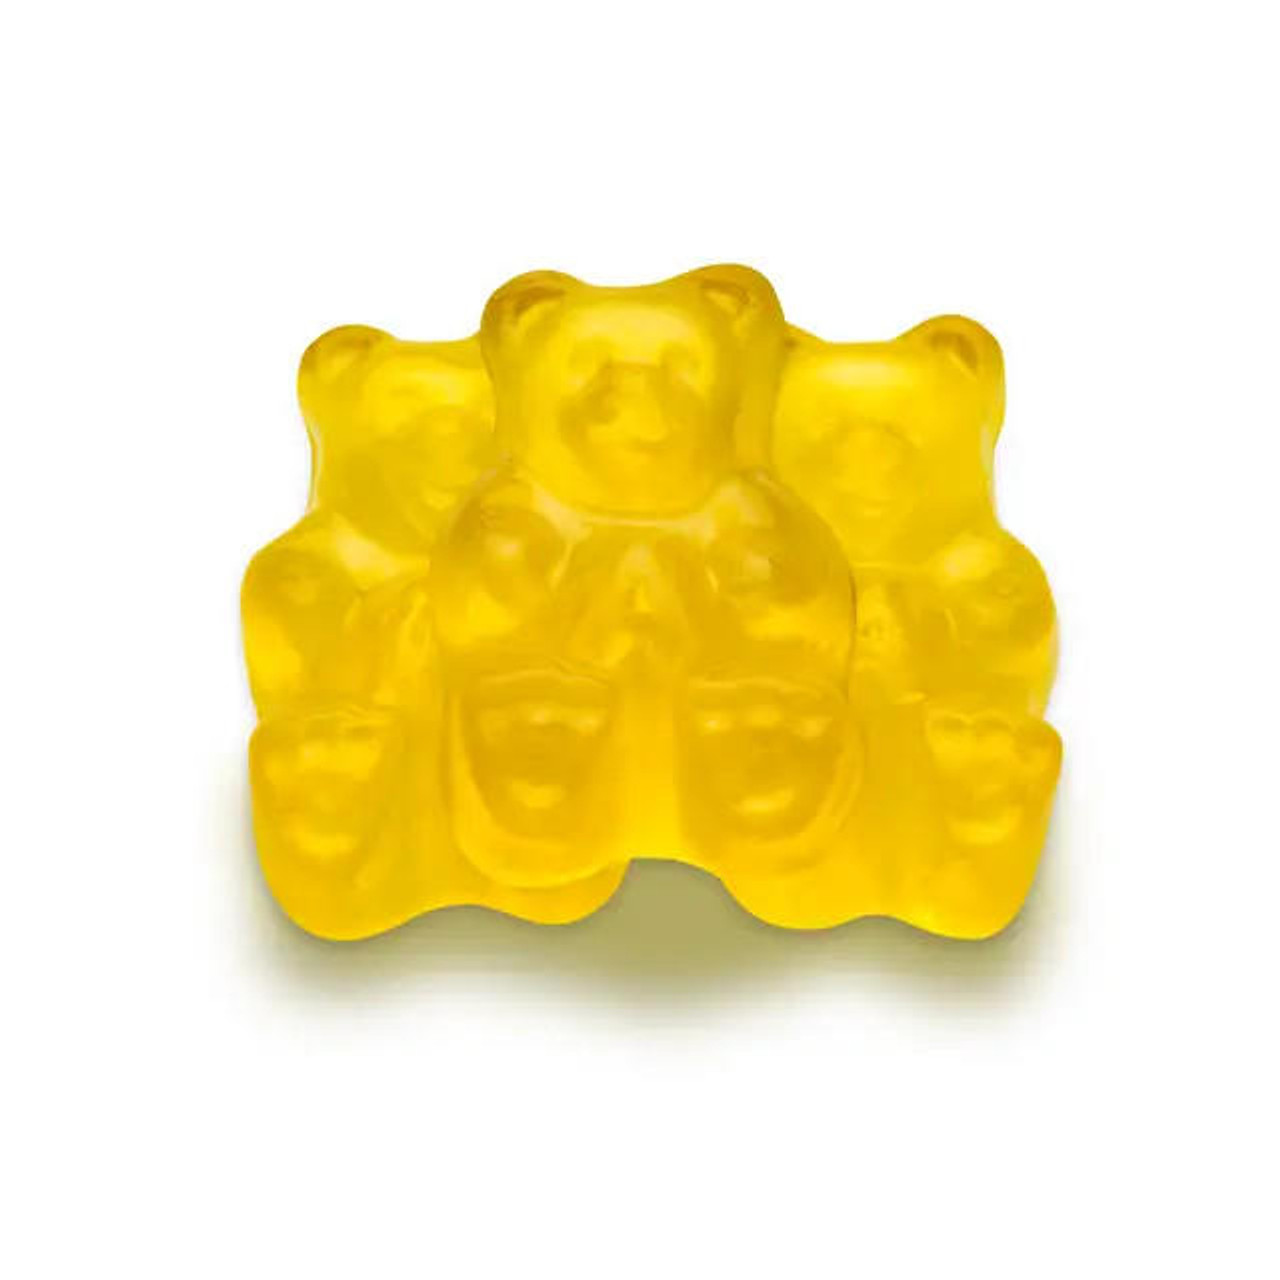  Albanese Mango Gummi Bears 5 lb. - 4/Case | Sweet and Tropical Gummy Candy 